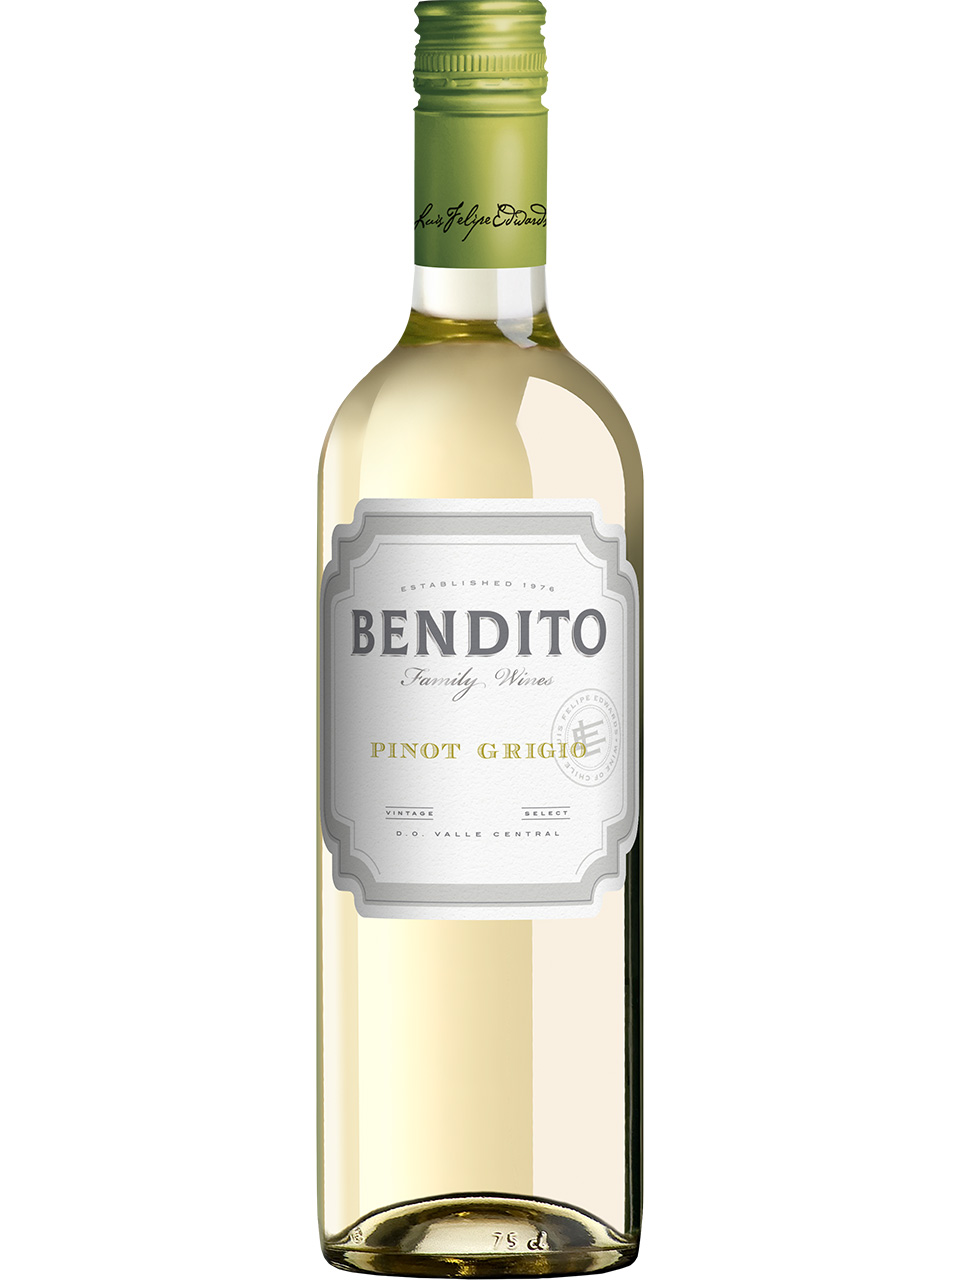 Bendito Classic Pinot Grigio